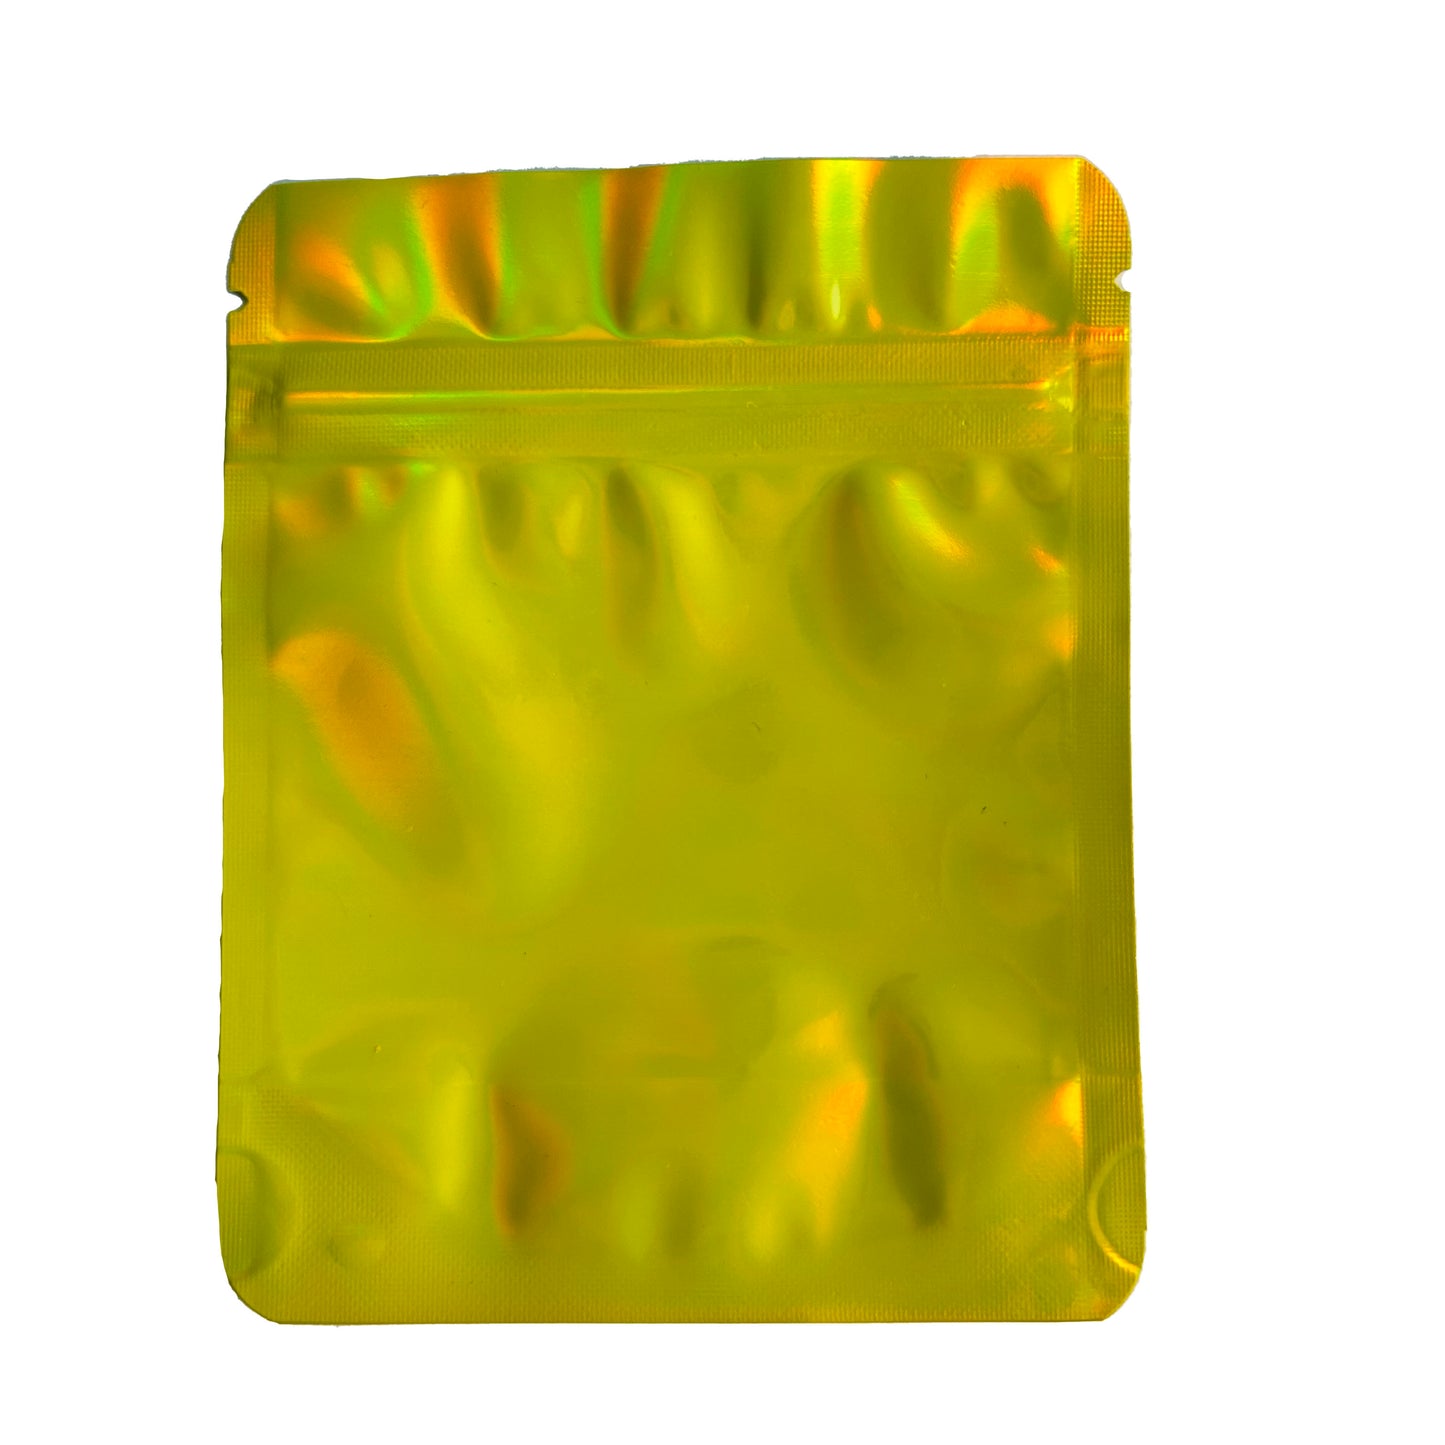 Plain Yellow 3.5G Mylar Bags